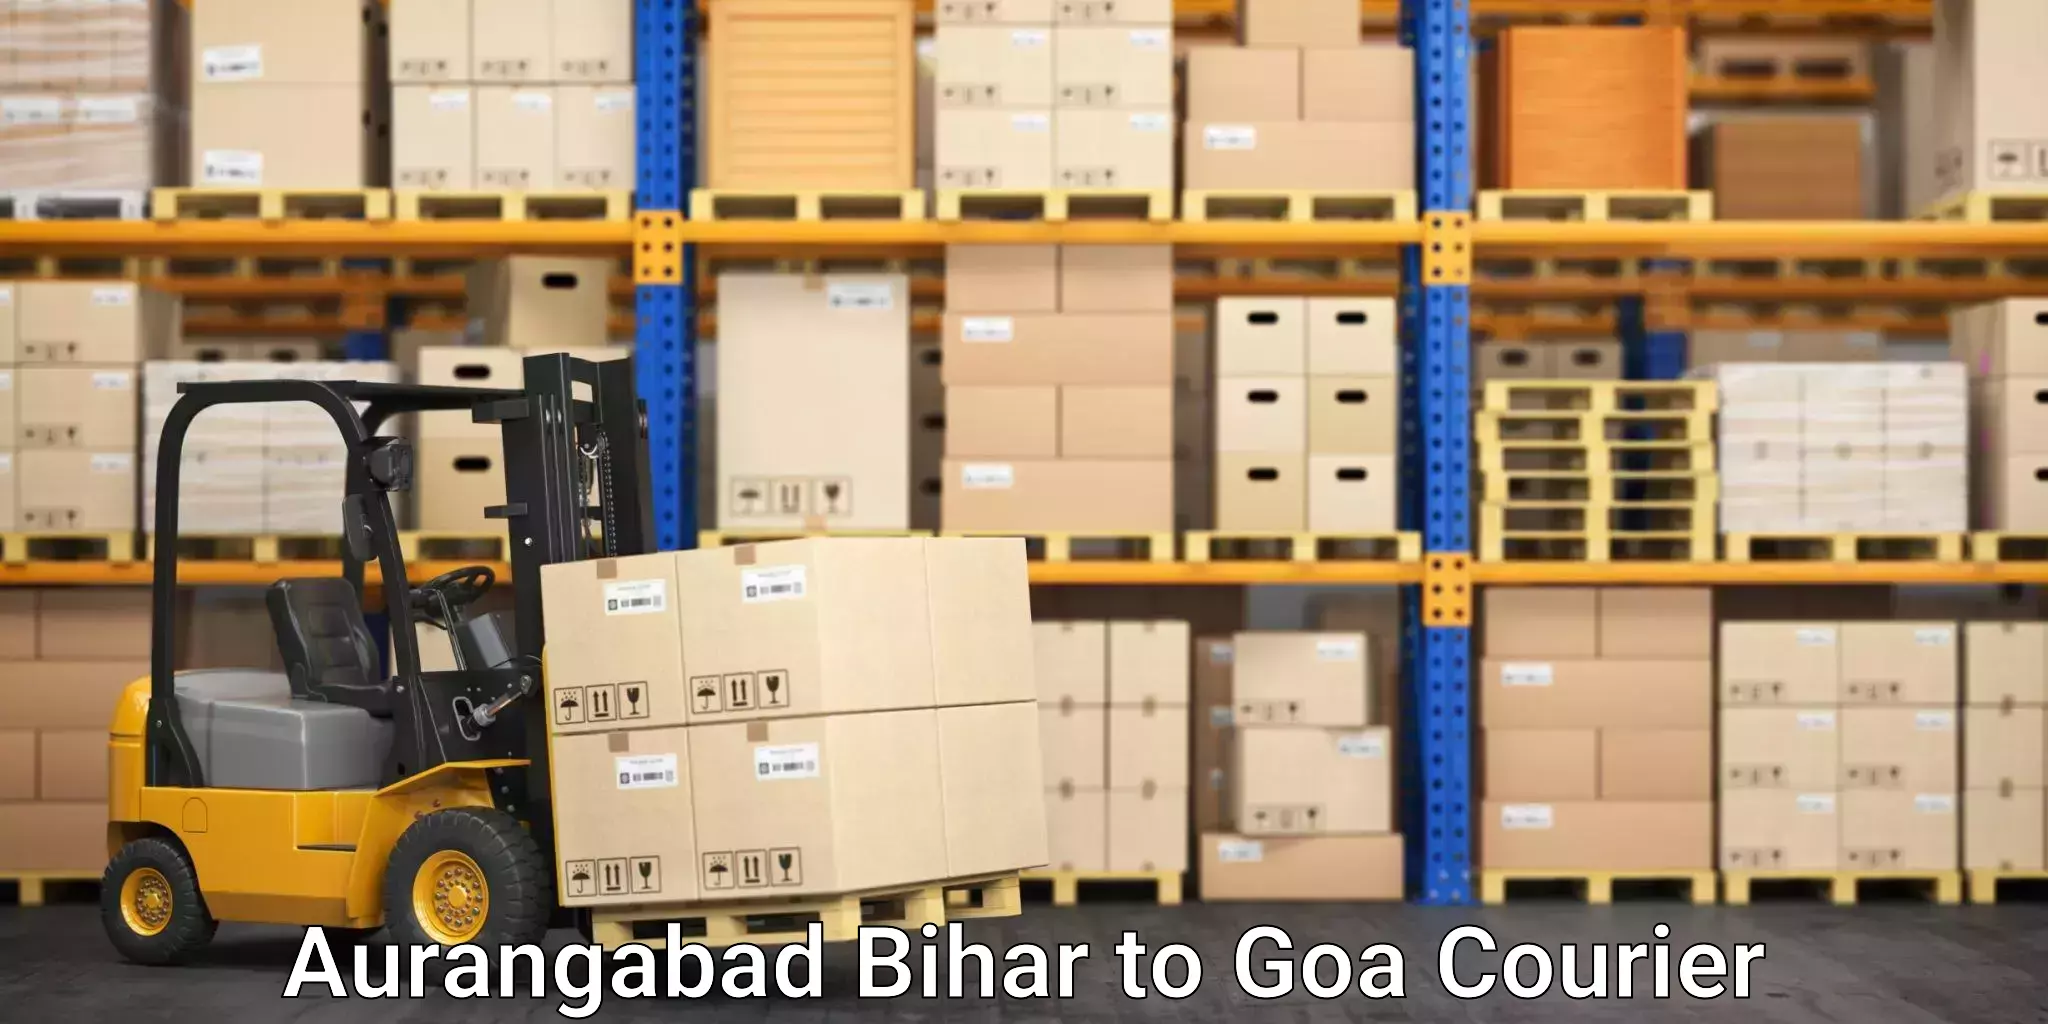 Household goods movers Aurangabad Bihar to Goa